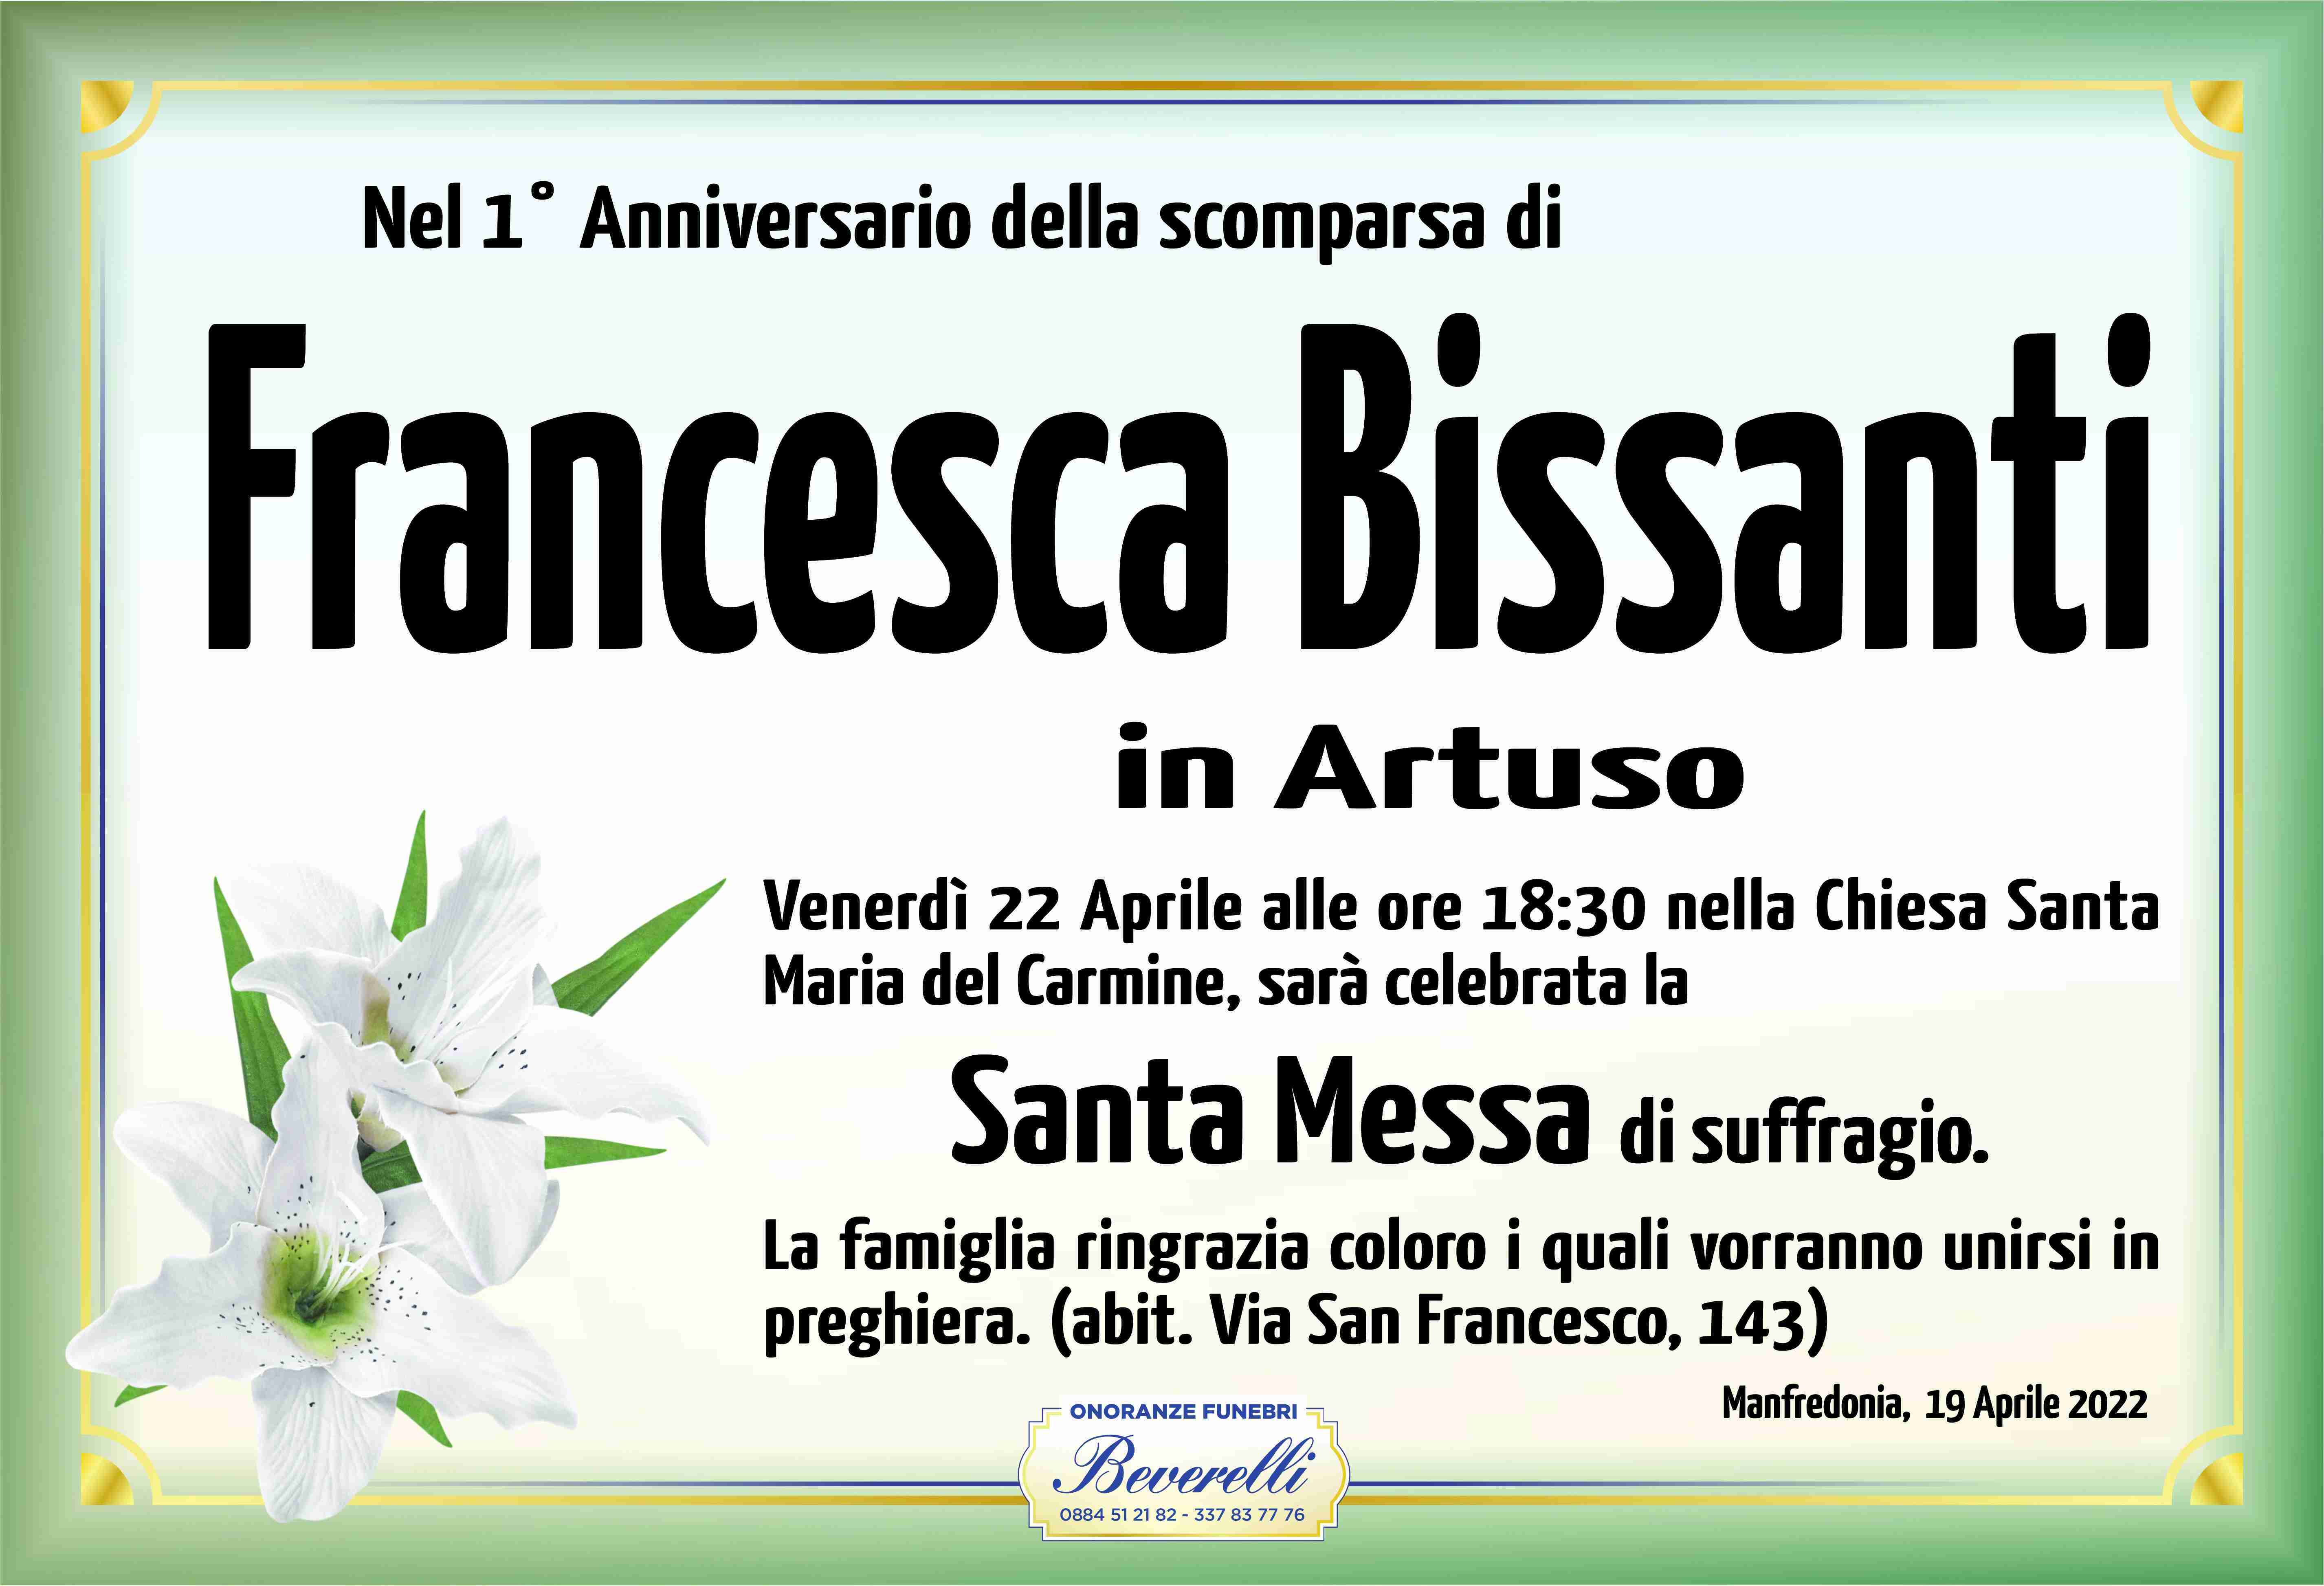 Francesca Bissanti